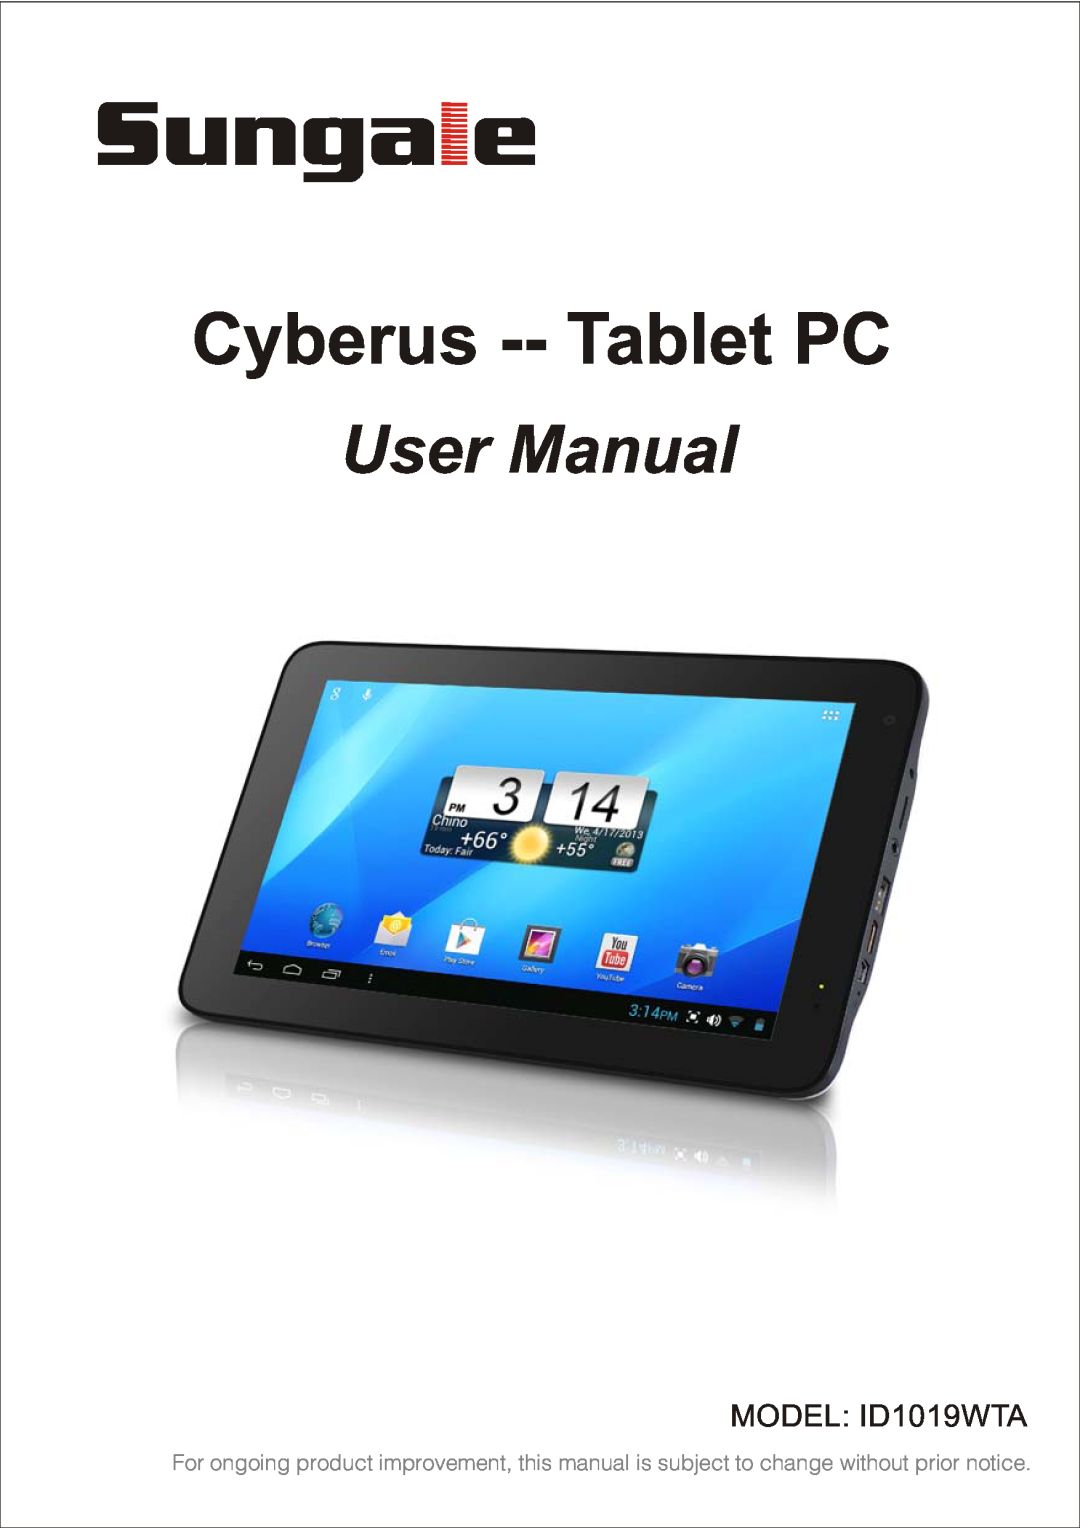 Sungale ID1019WTA user manual Cyberus -- Tablet PC, User Manual 